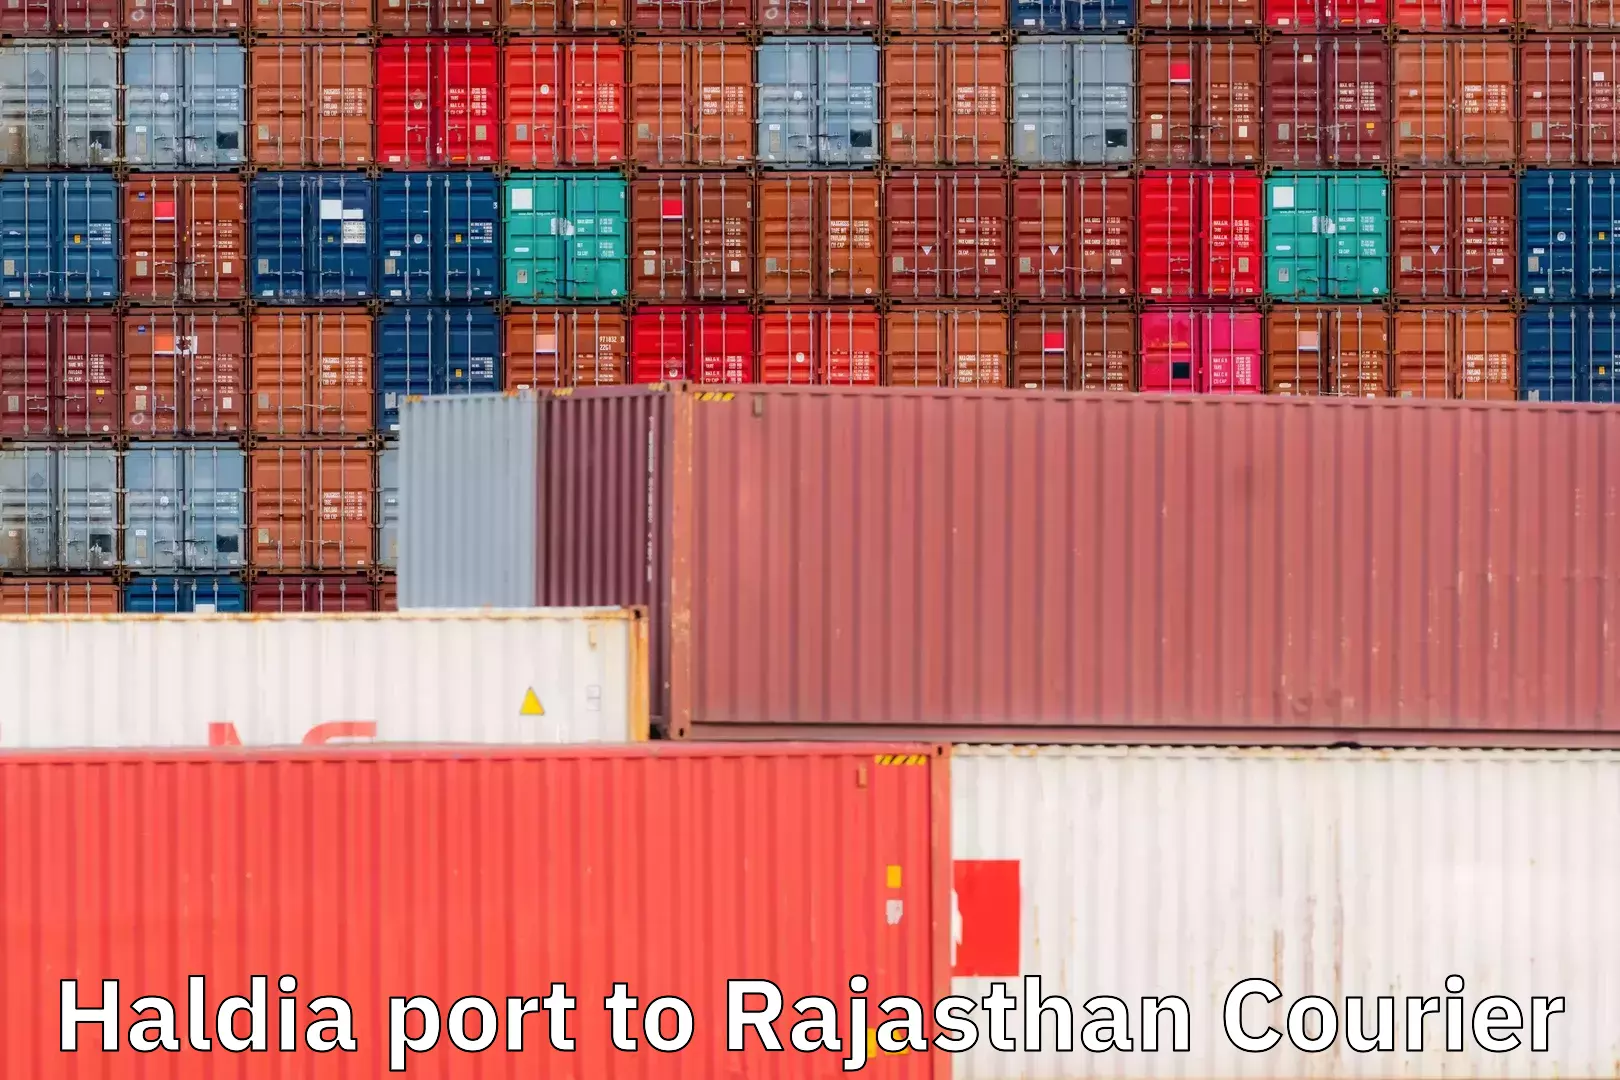 Quick booking process Haldia port to Rajasthan